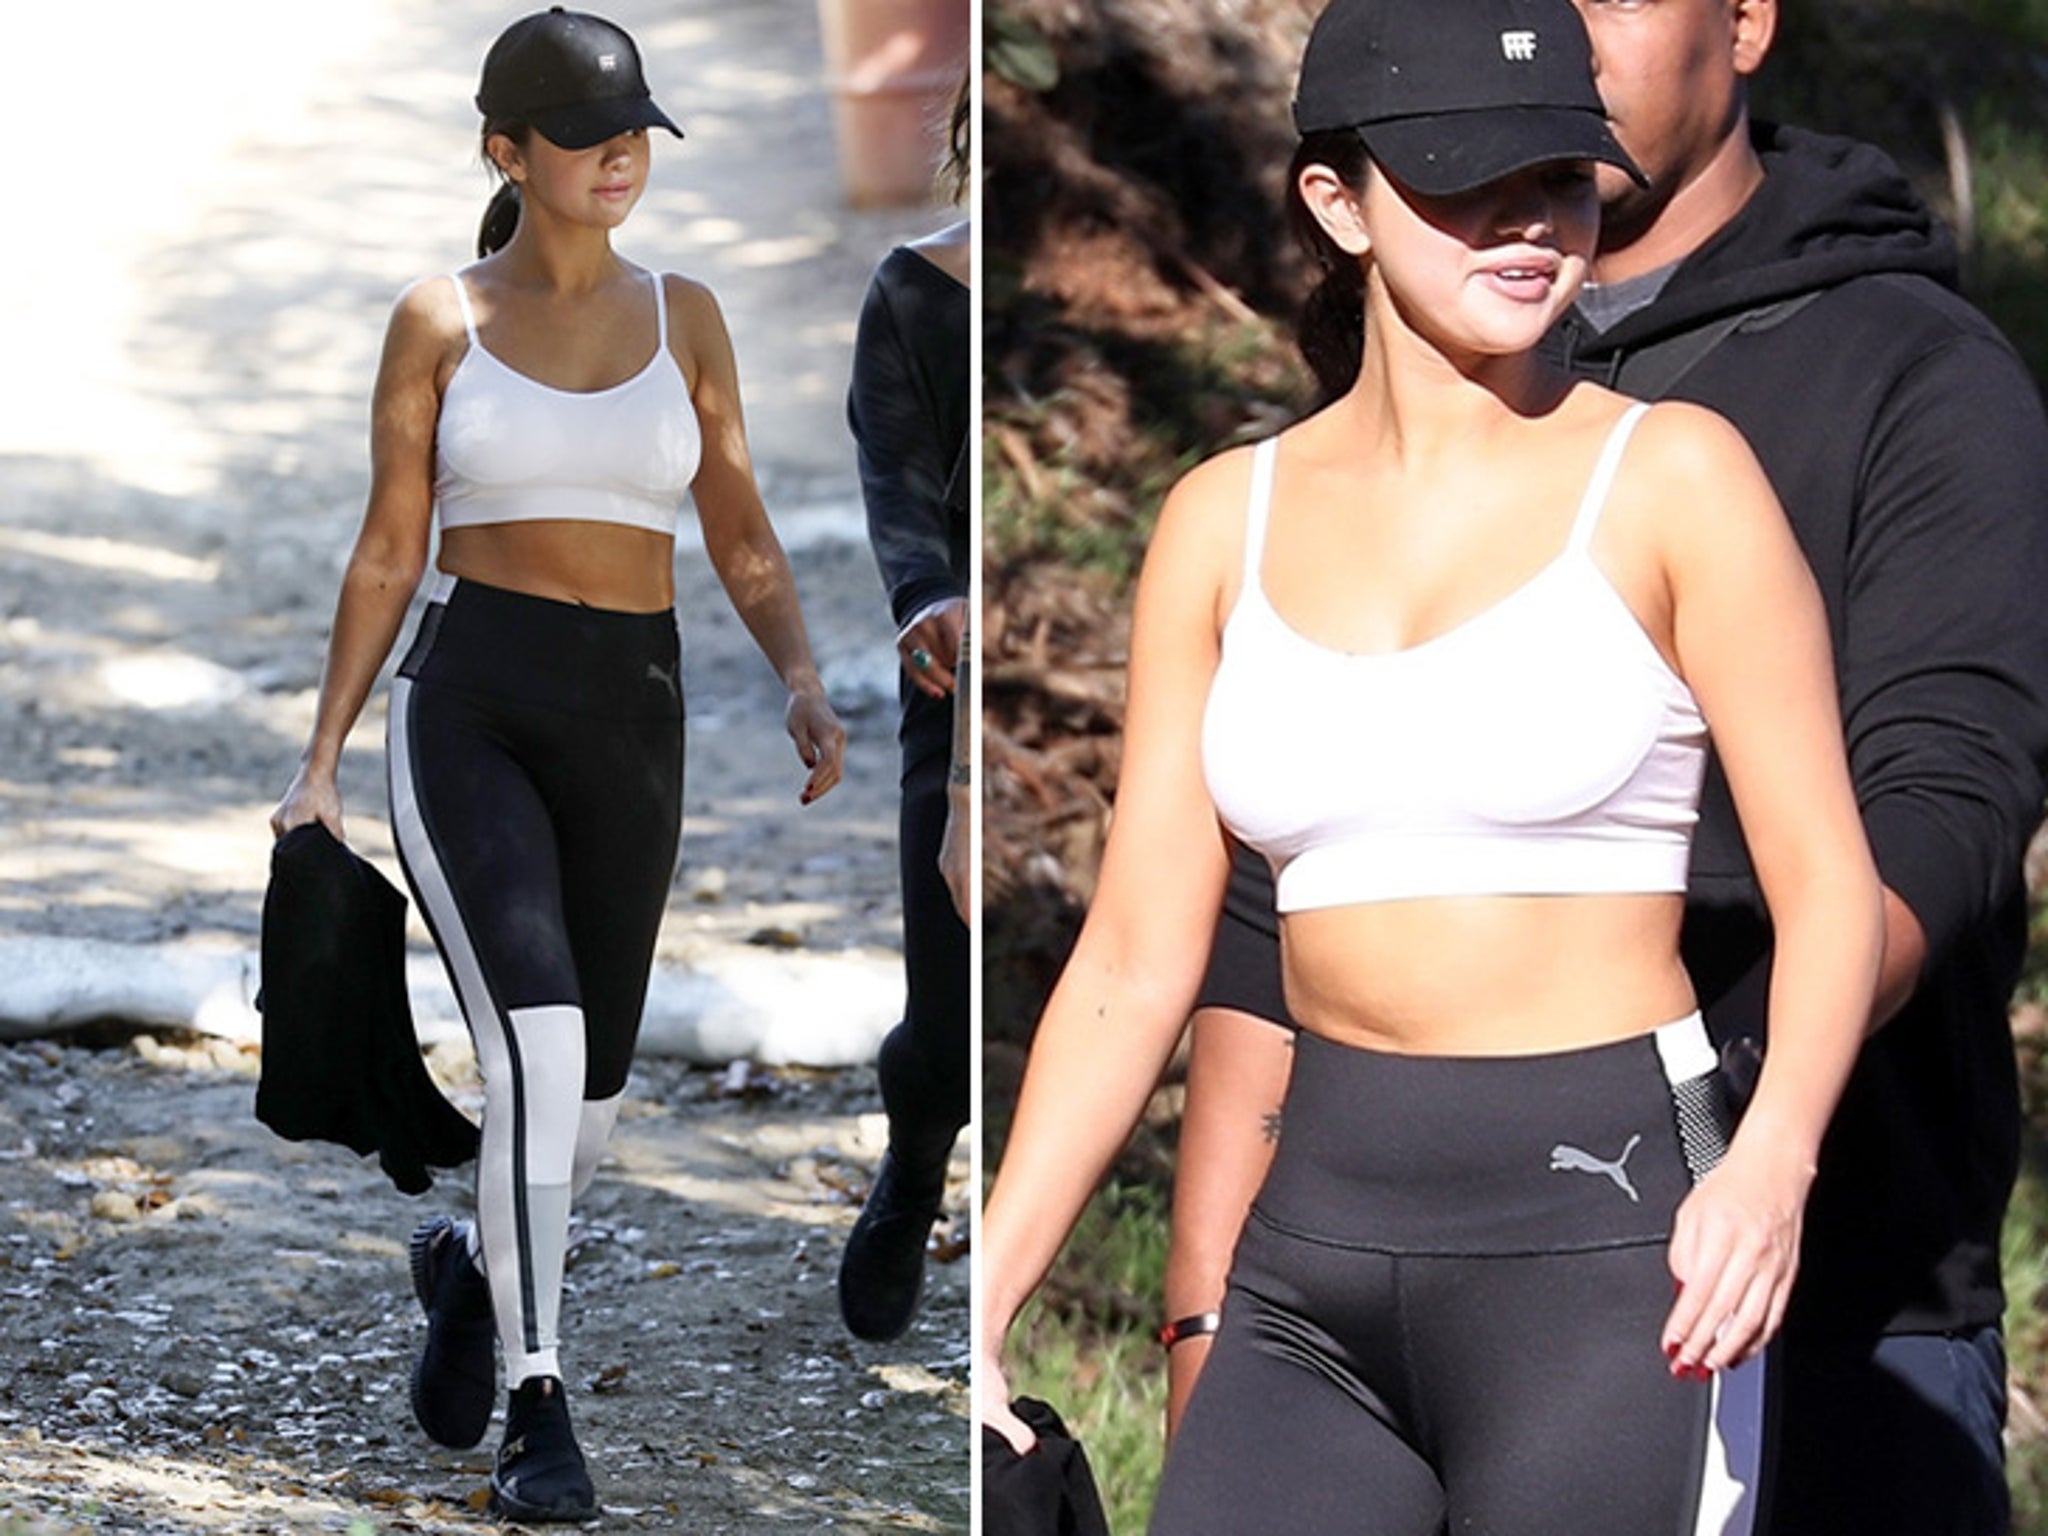 Selena Gomez Black Skinny Workout Leggings Malibu 2018